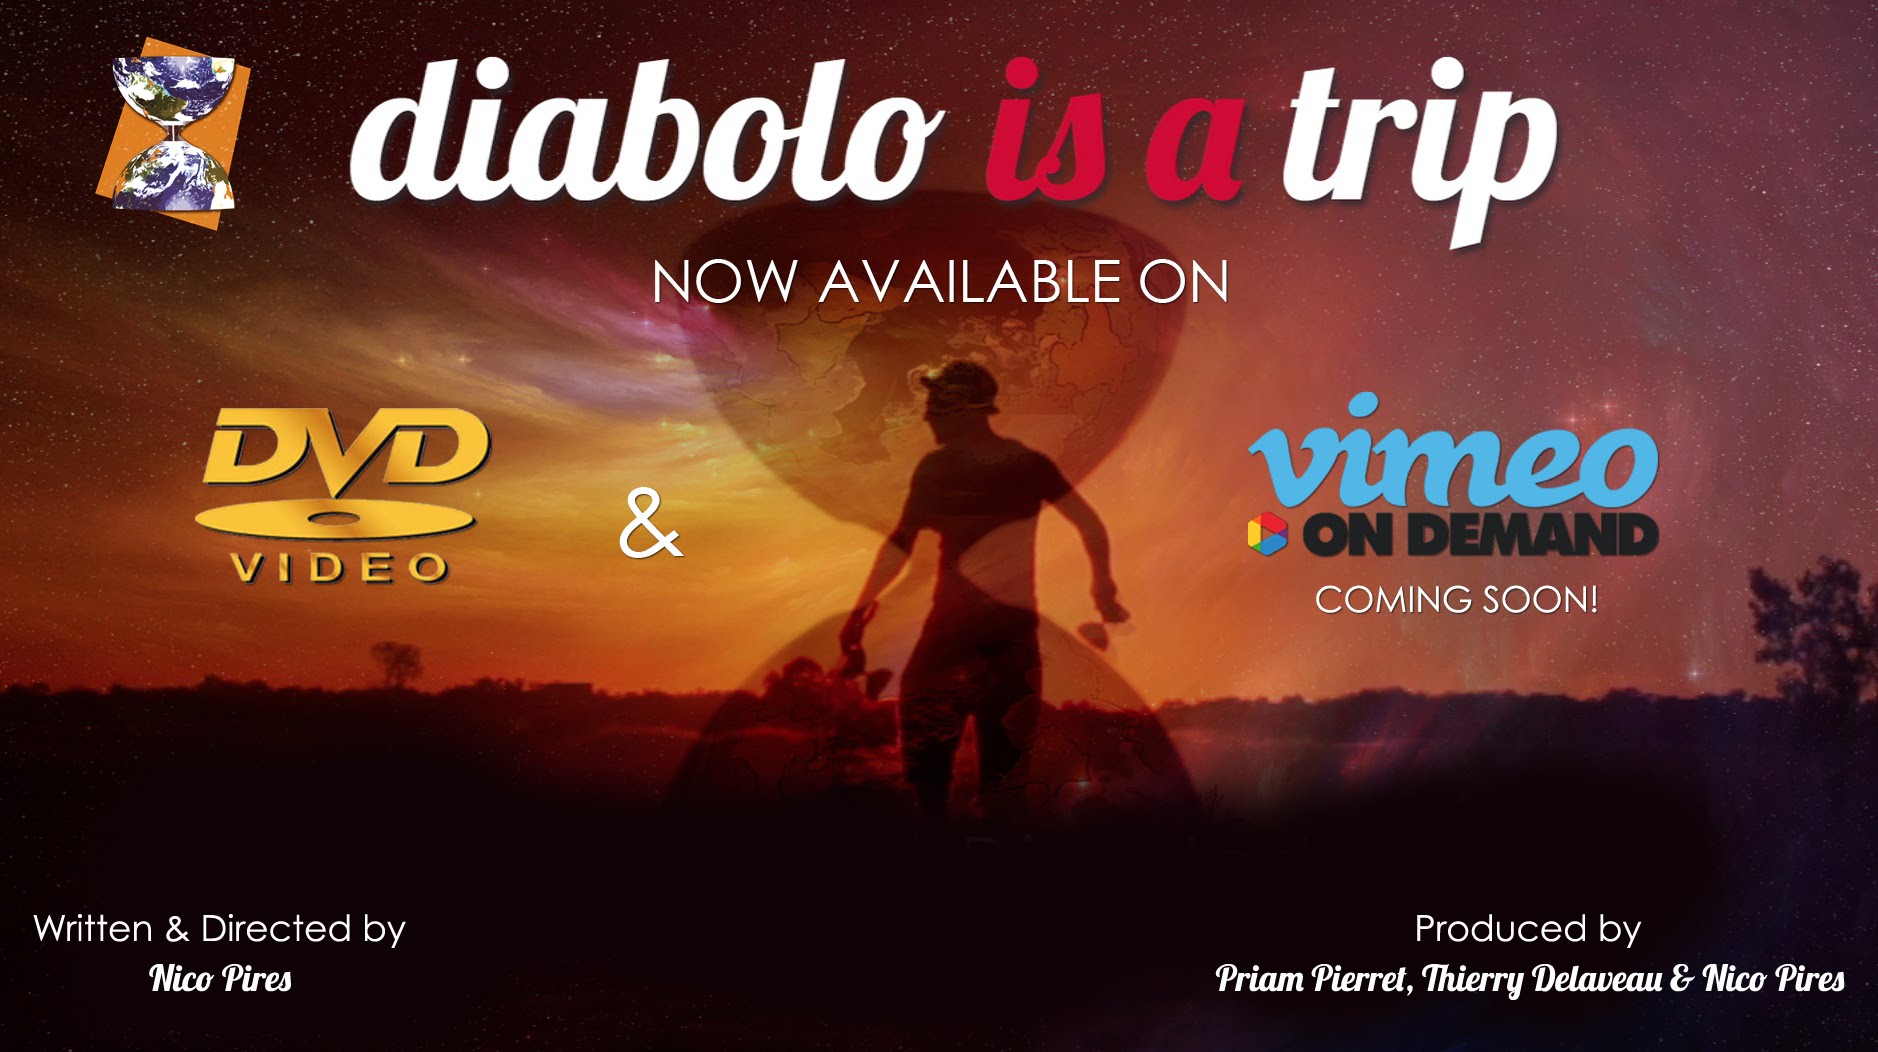 «Diabolo is a trip»